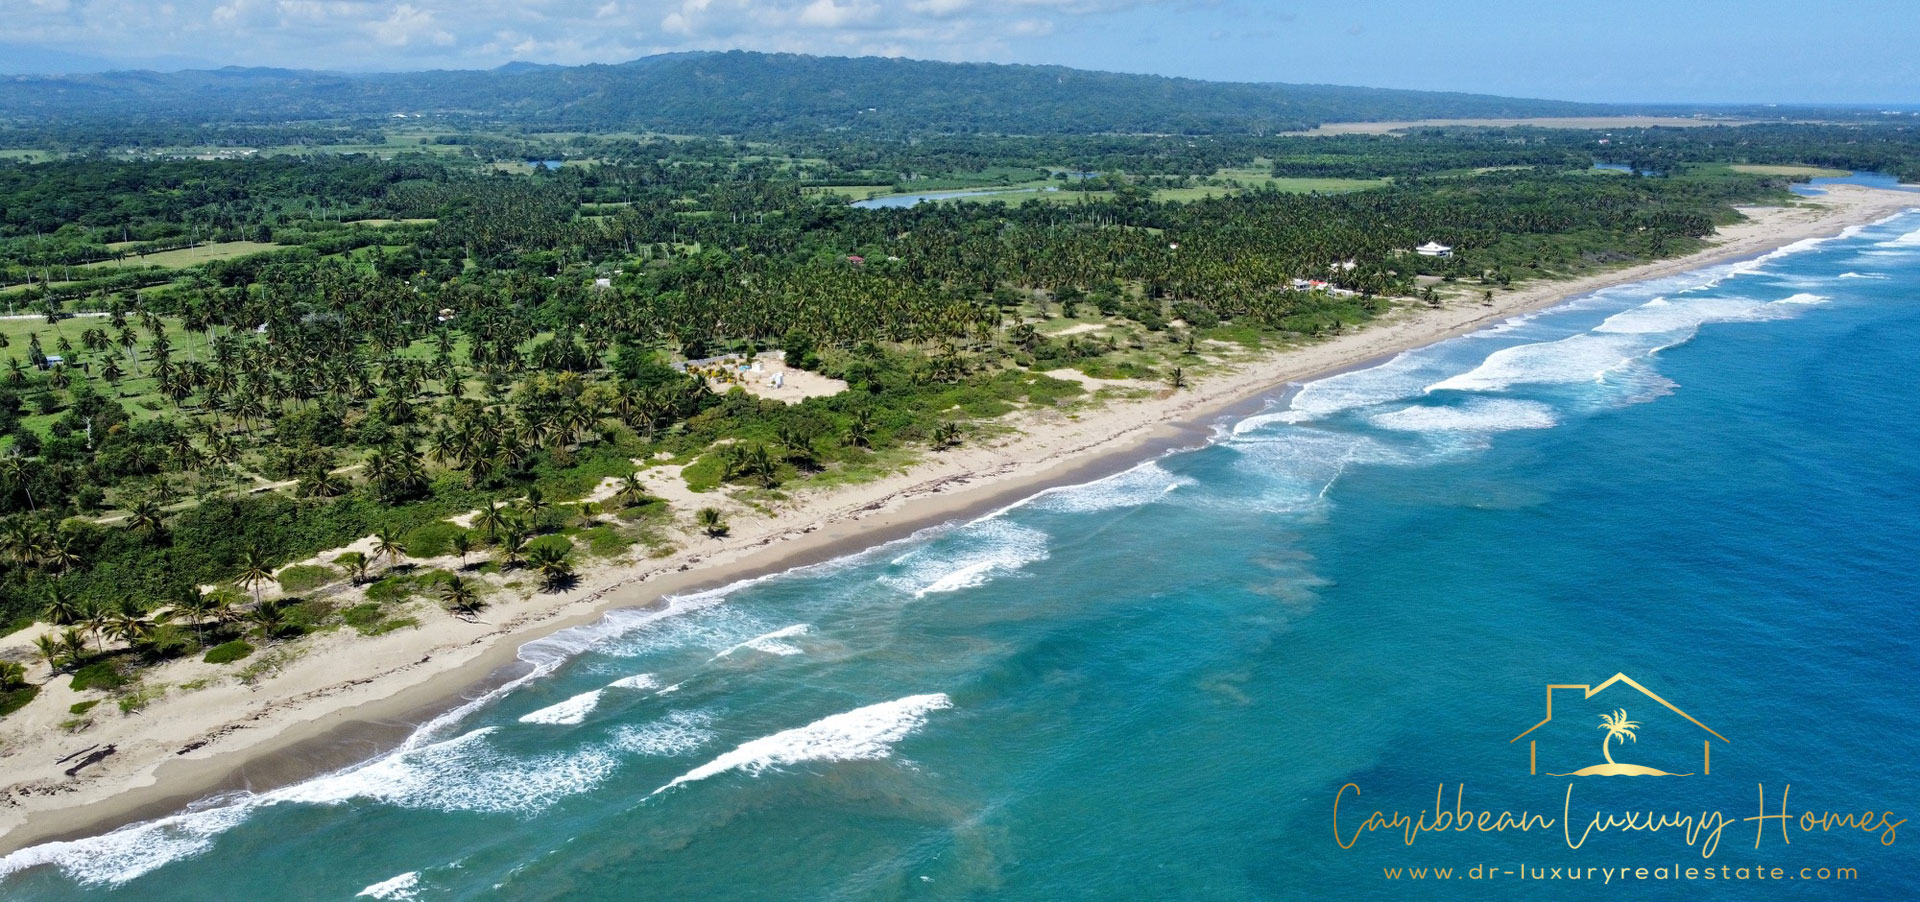 Unique beach propert in the Dominican Republic